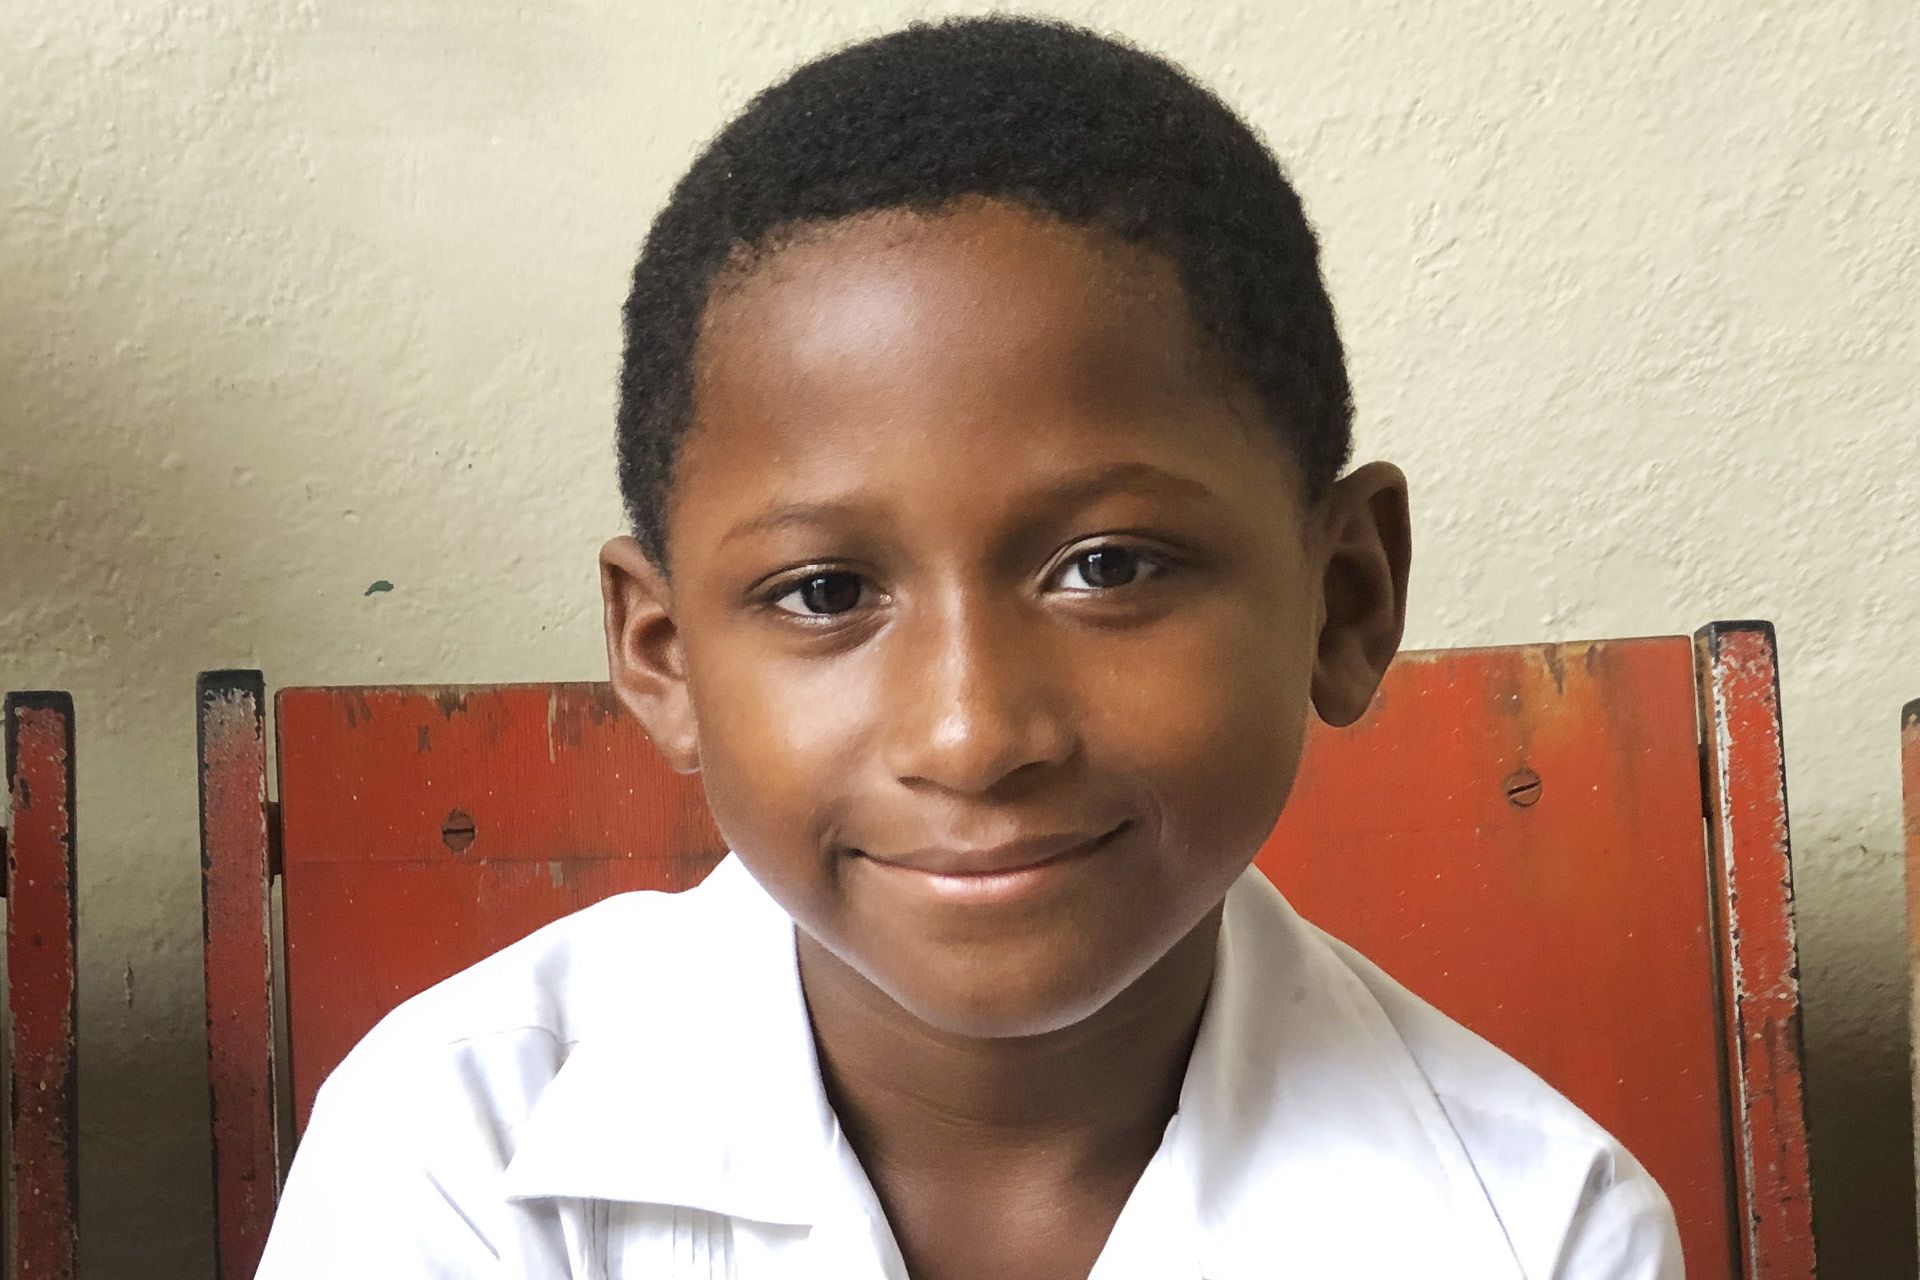 Laer Spencer, 7, lives in La Lima. Image by Jaime Joyce. Honduras, 2019.